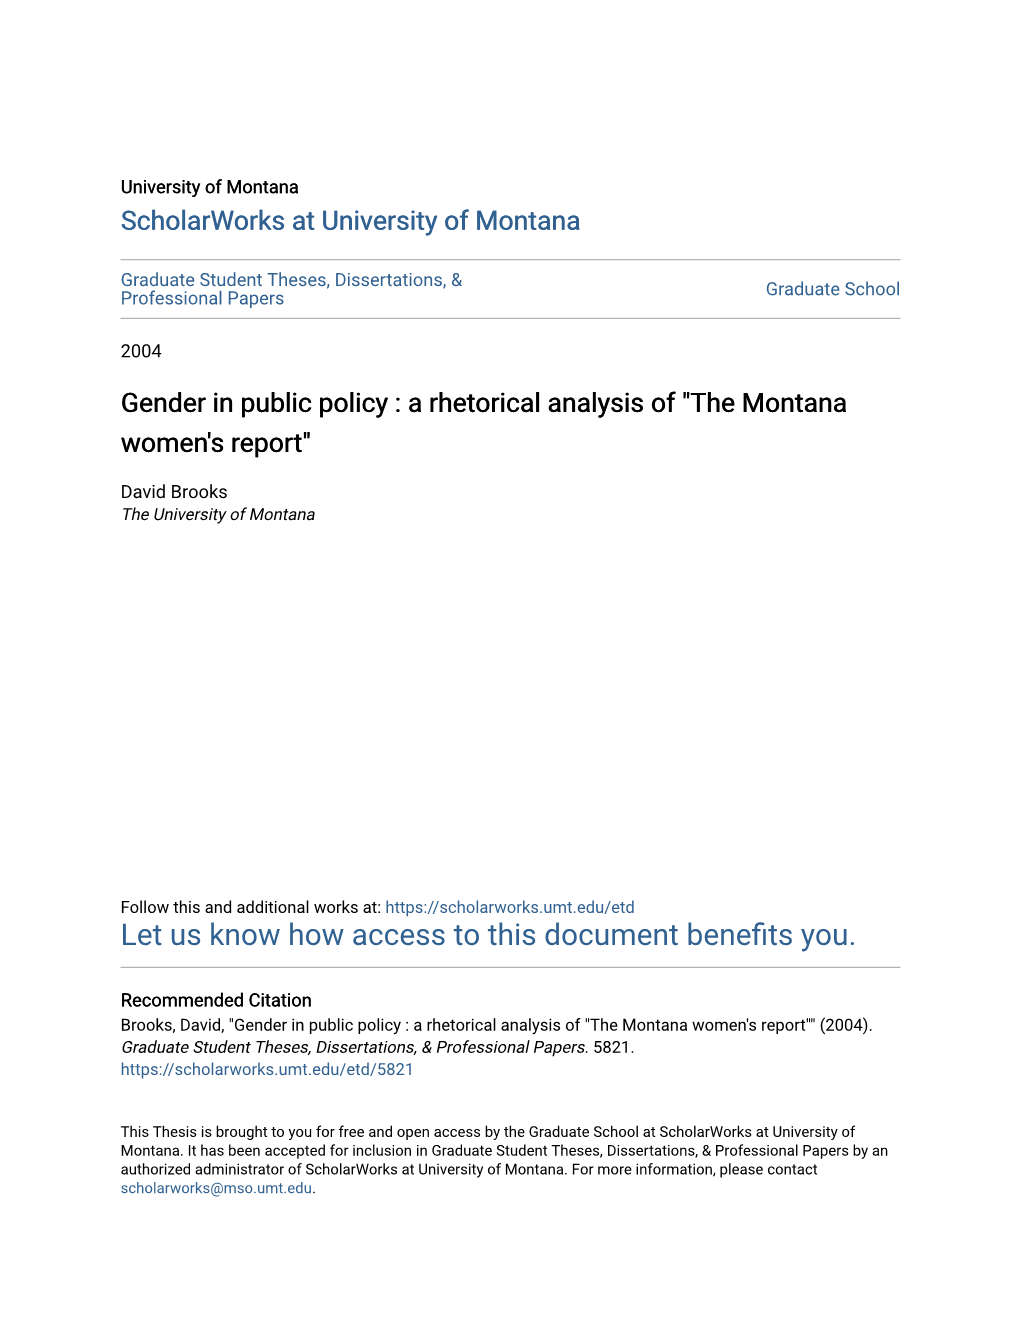 A Rhetorical Analysis of "The Montana Women's Report"